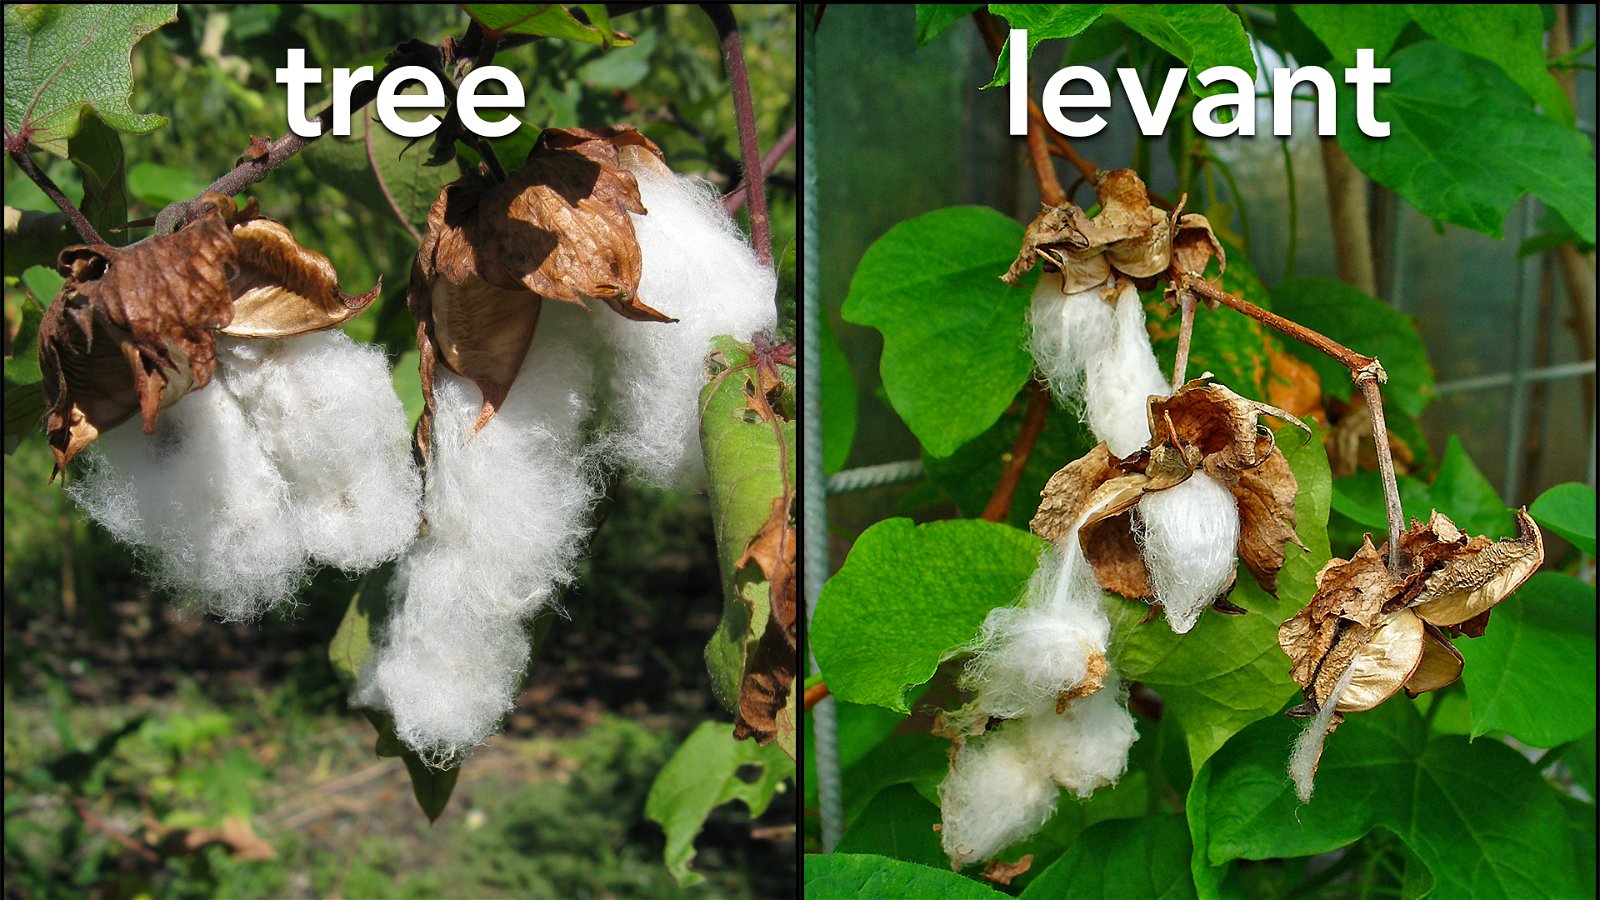 tree and levant cotton